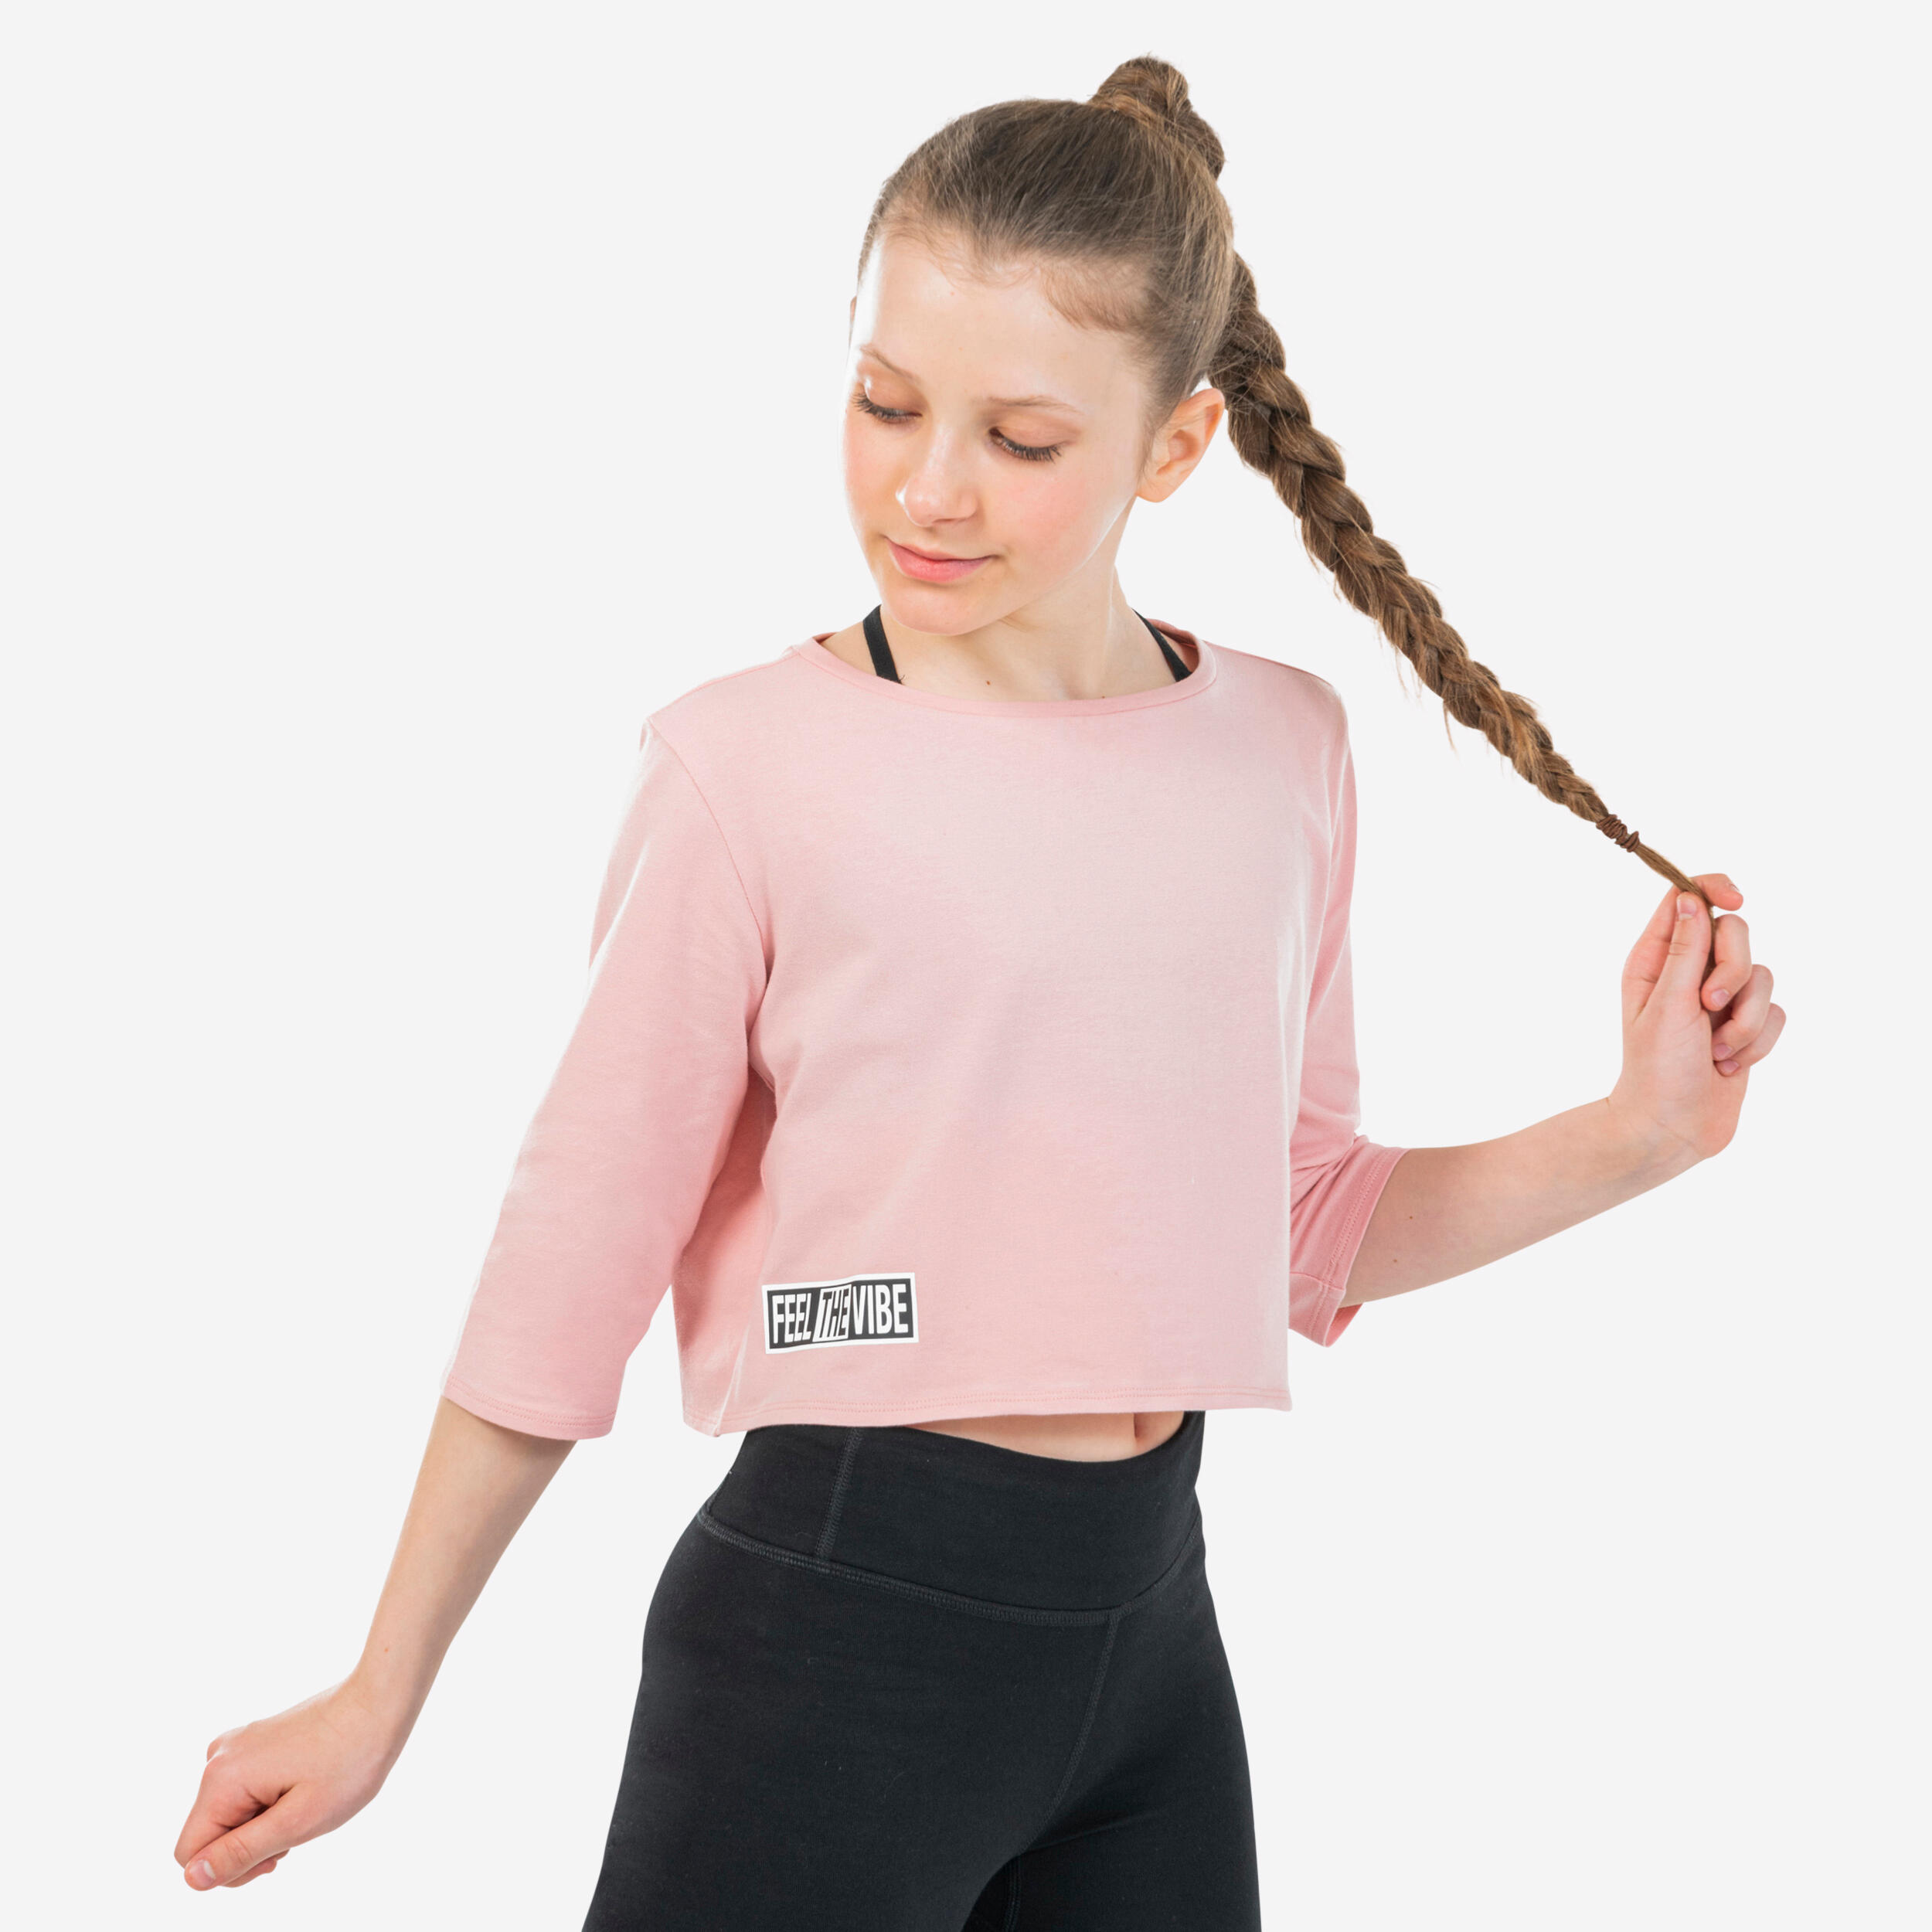 STAREVER Girls' Modern Dance Cropped T-Shirt - Pink